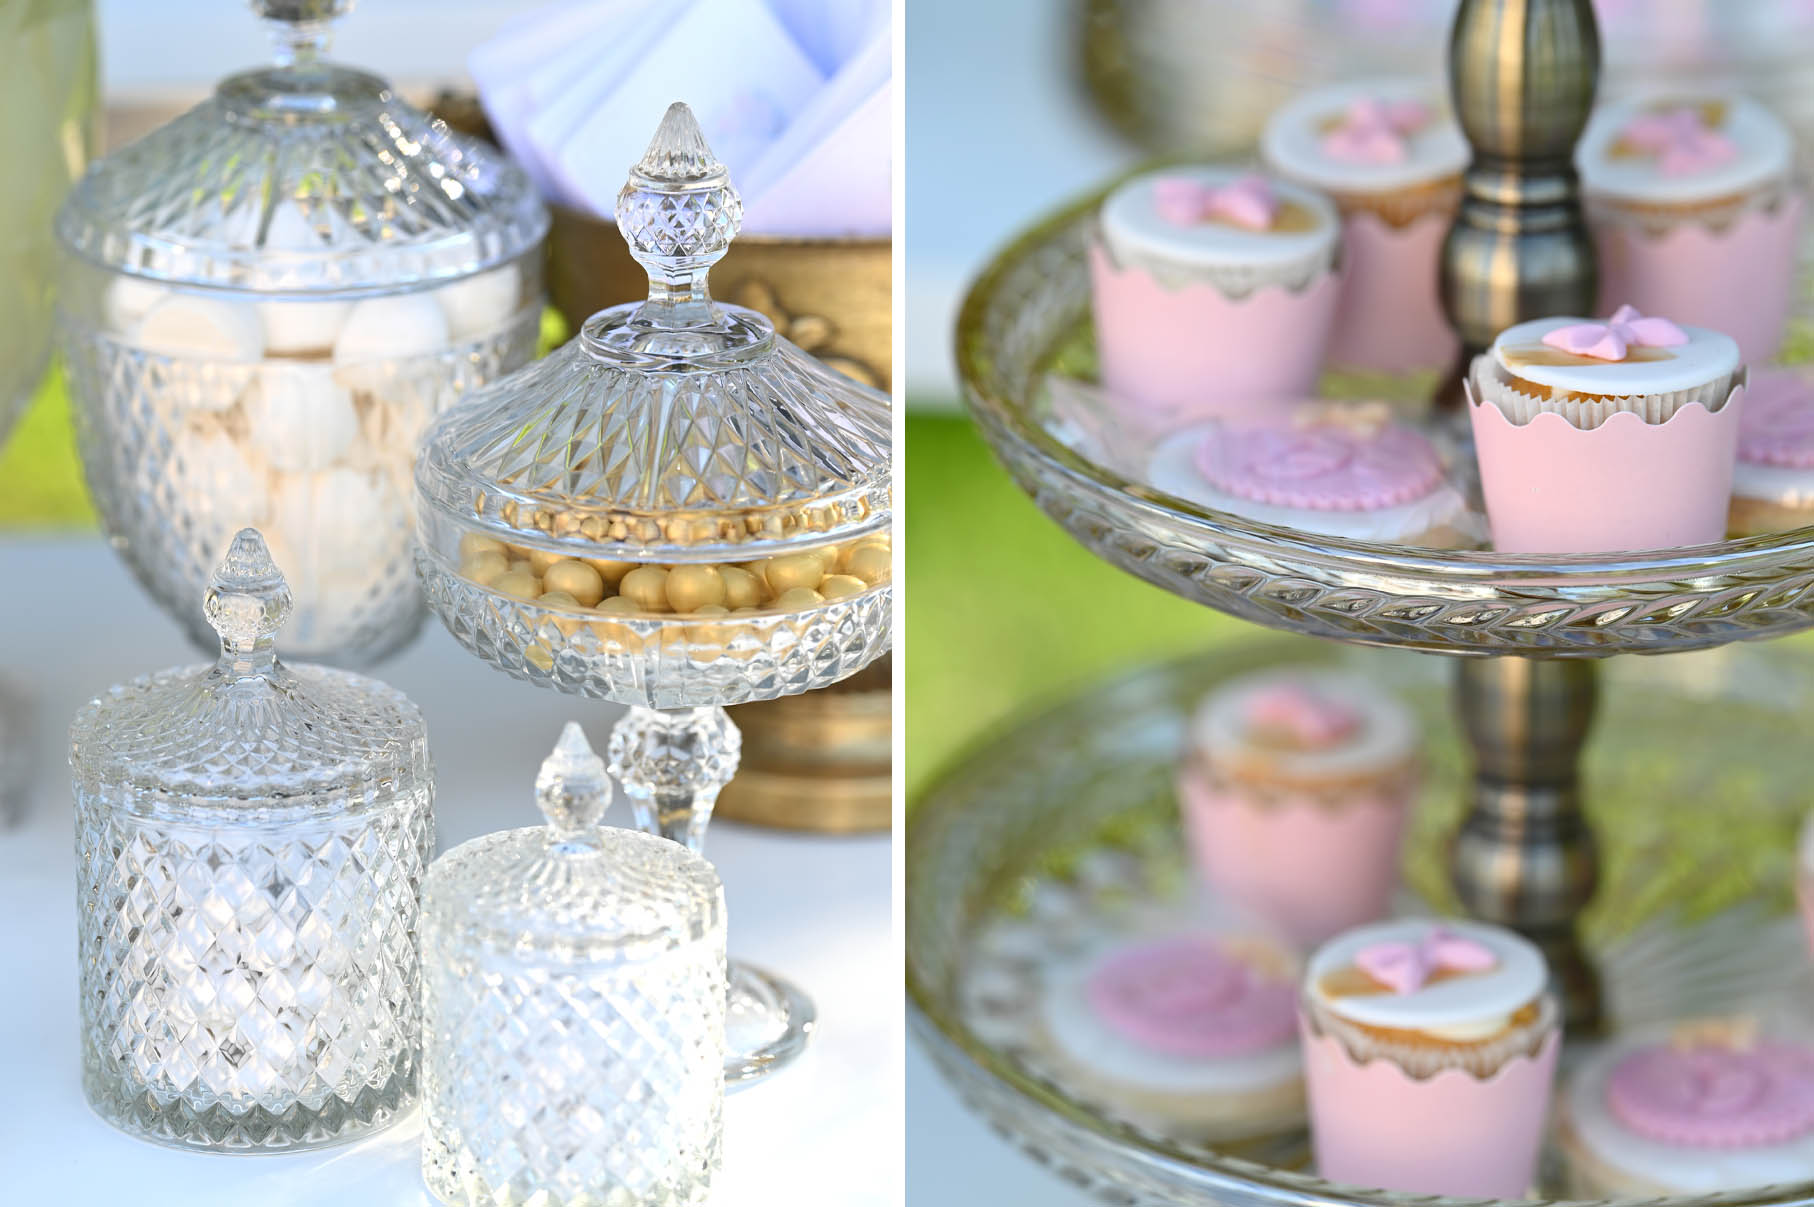 wedding-details-cakes- larissa-alexis-koumaditis-photography-larissa47 copy